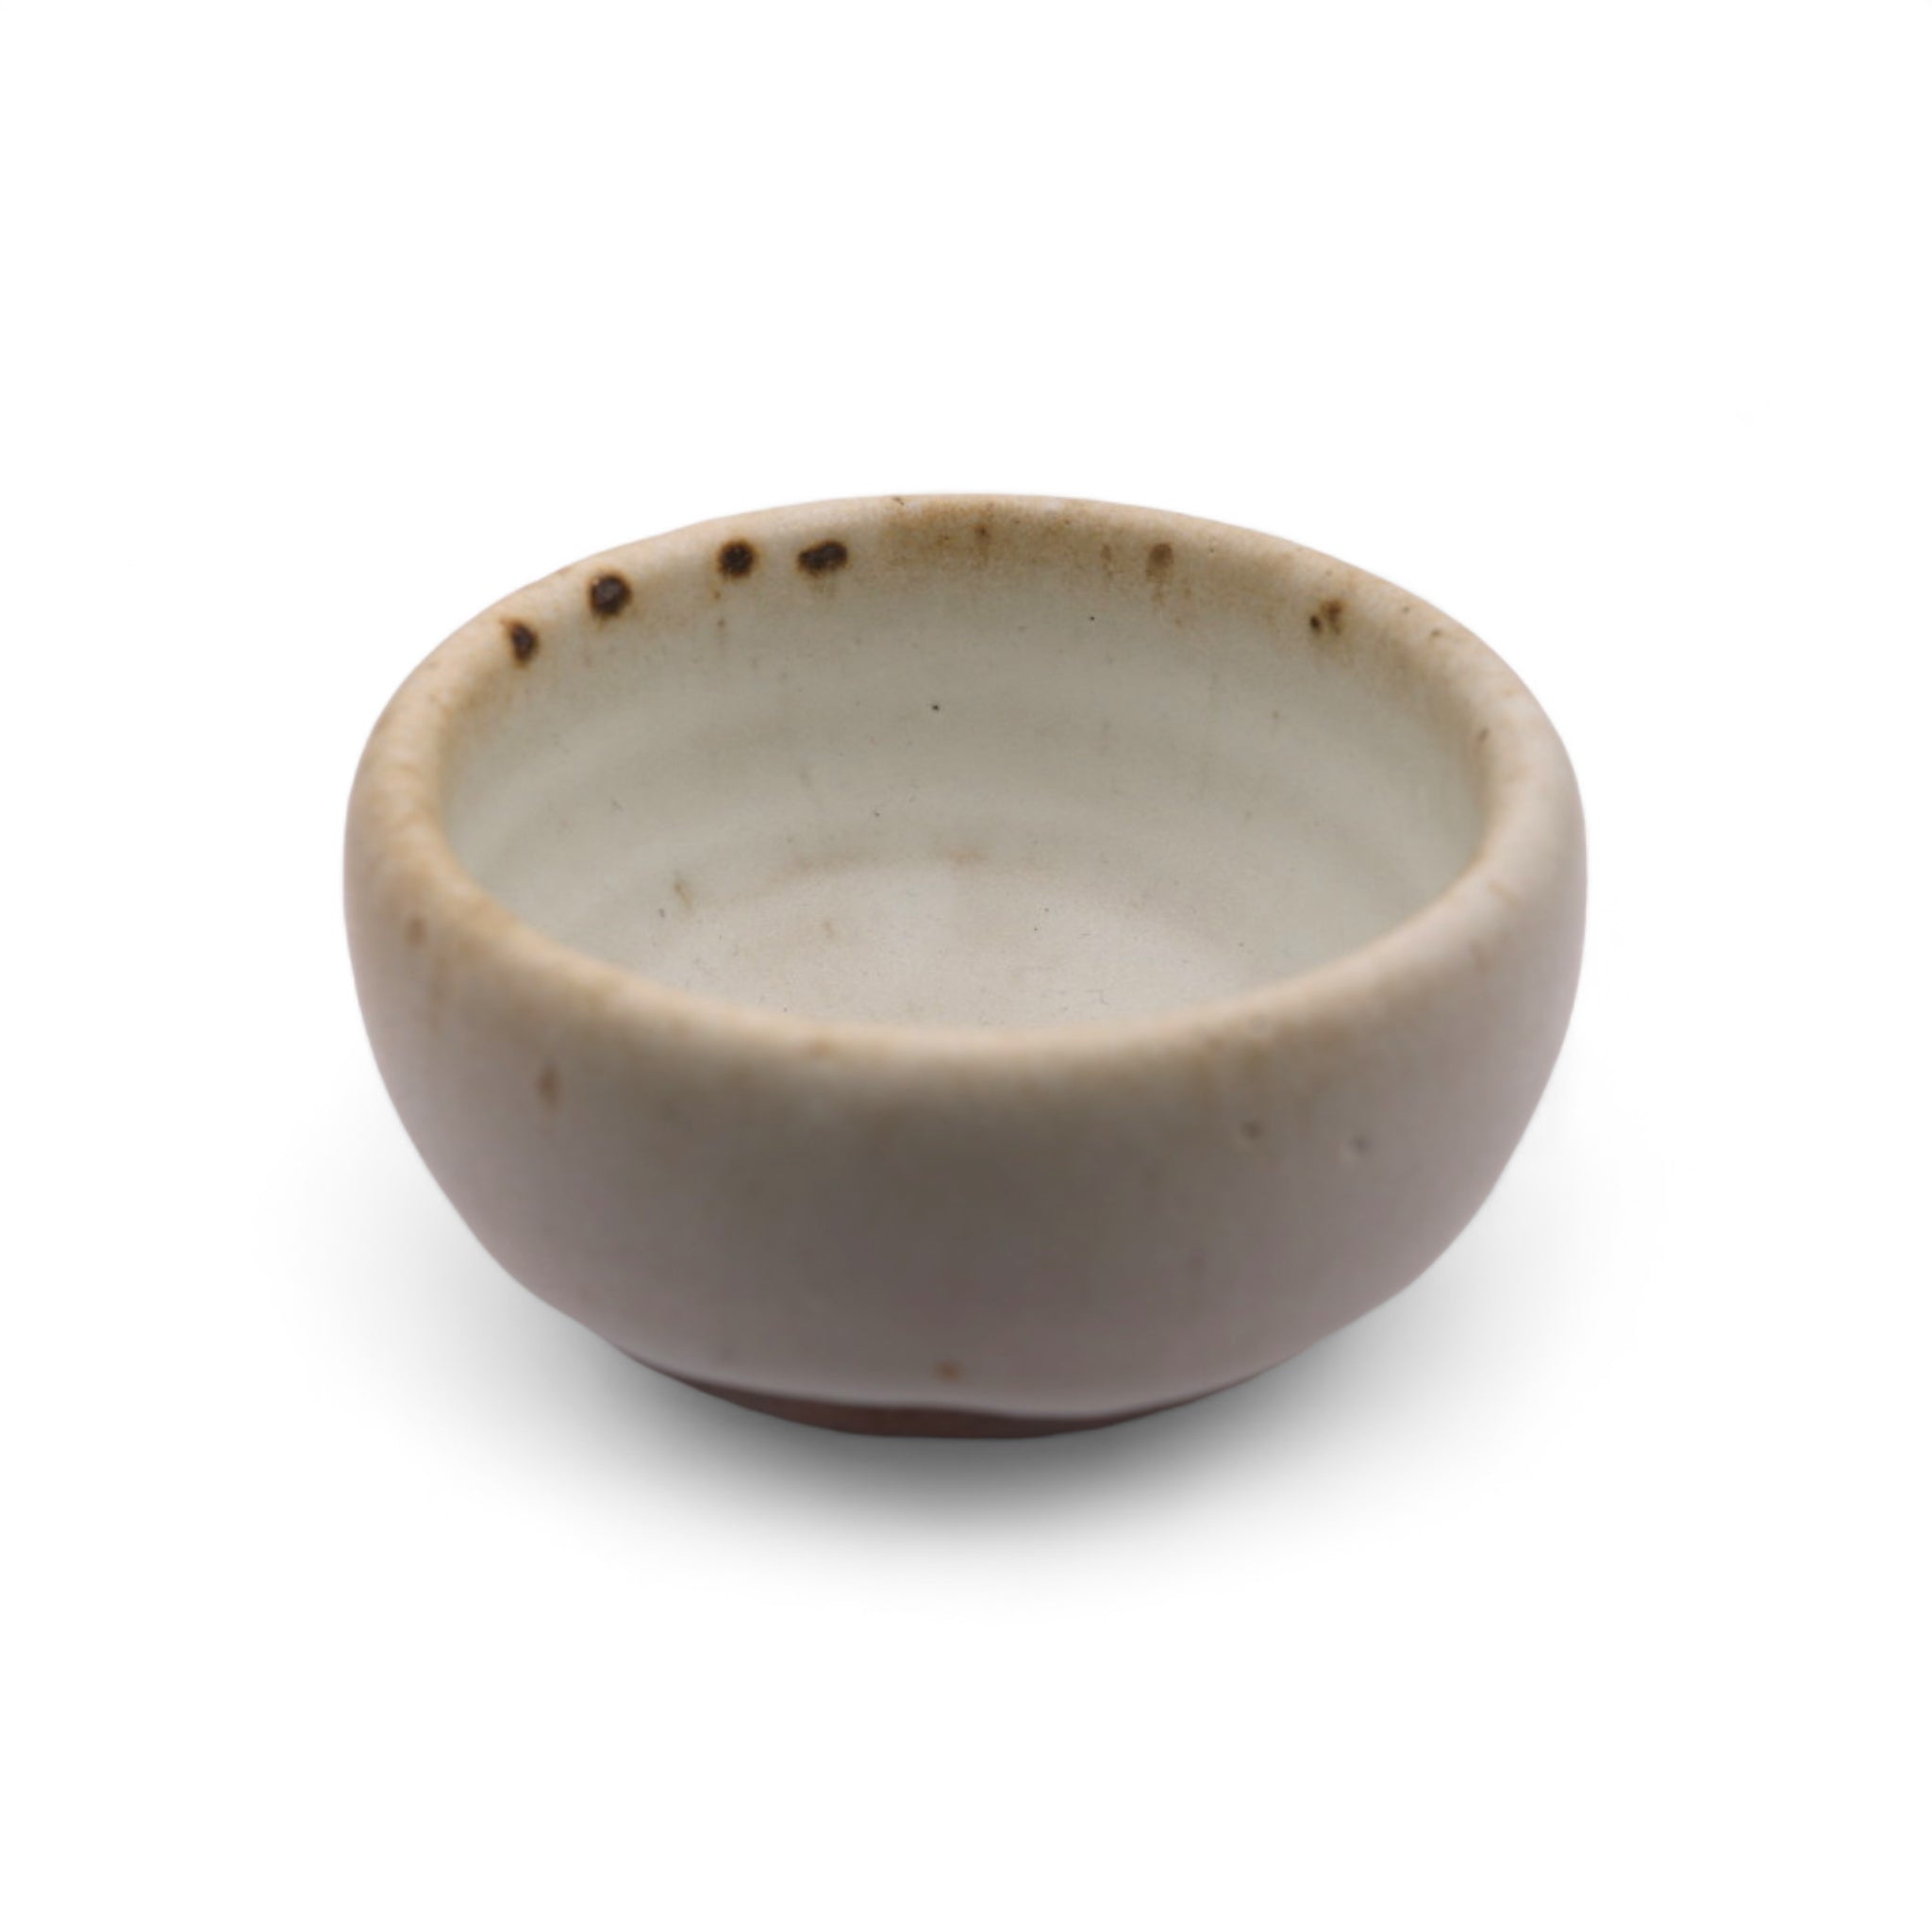 Taiwanese Handmade Wood-Fired Ceramic Teacup - Creamy Horizon